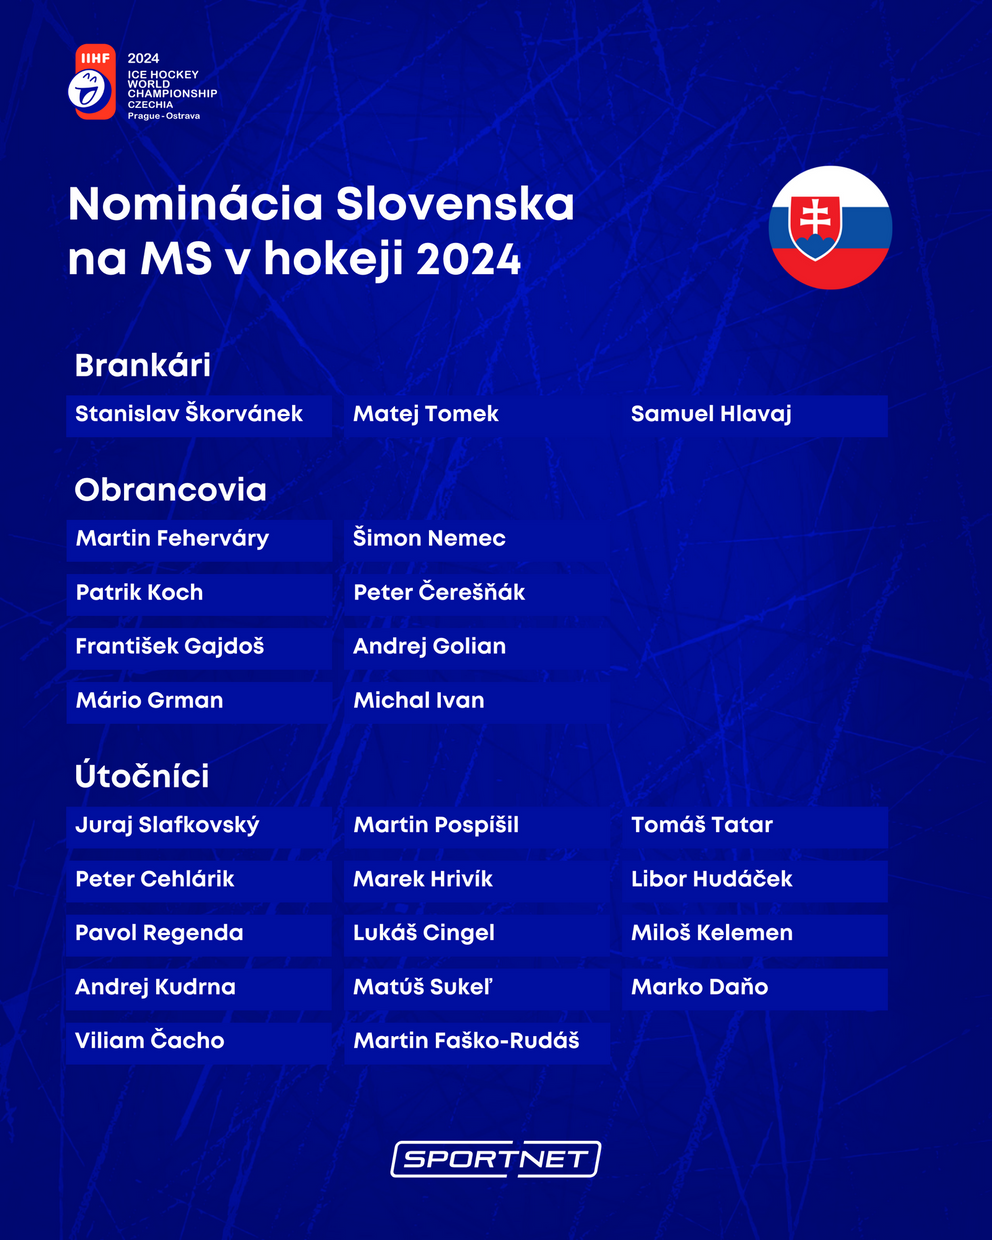 Nominácia Slovenska.